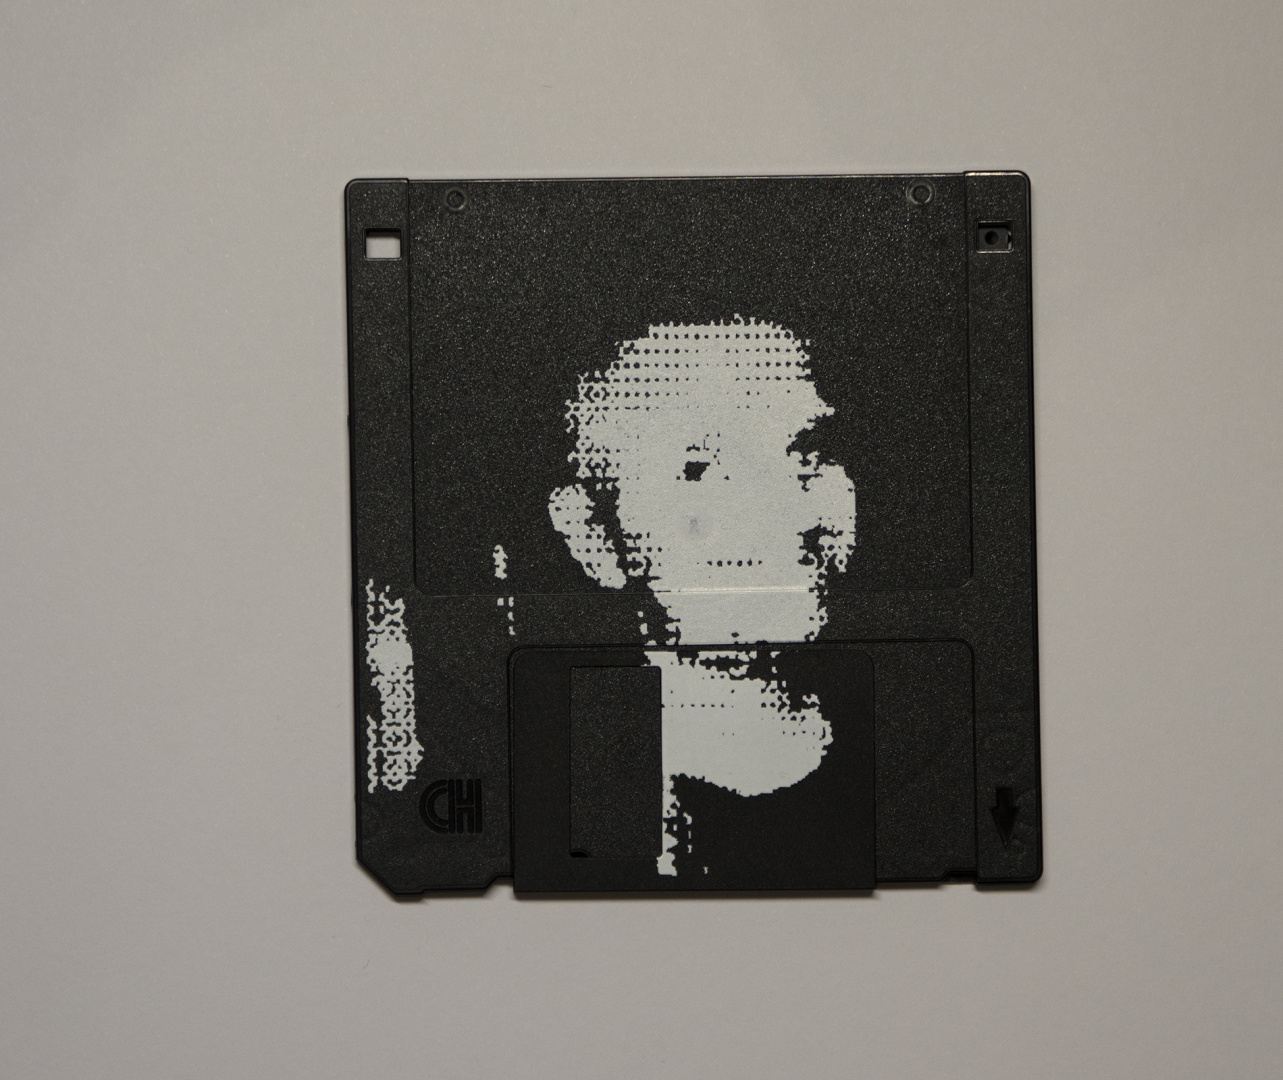 silk screened halftone portrait on 3.5" floppy disk 